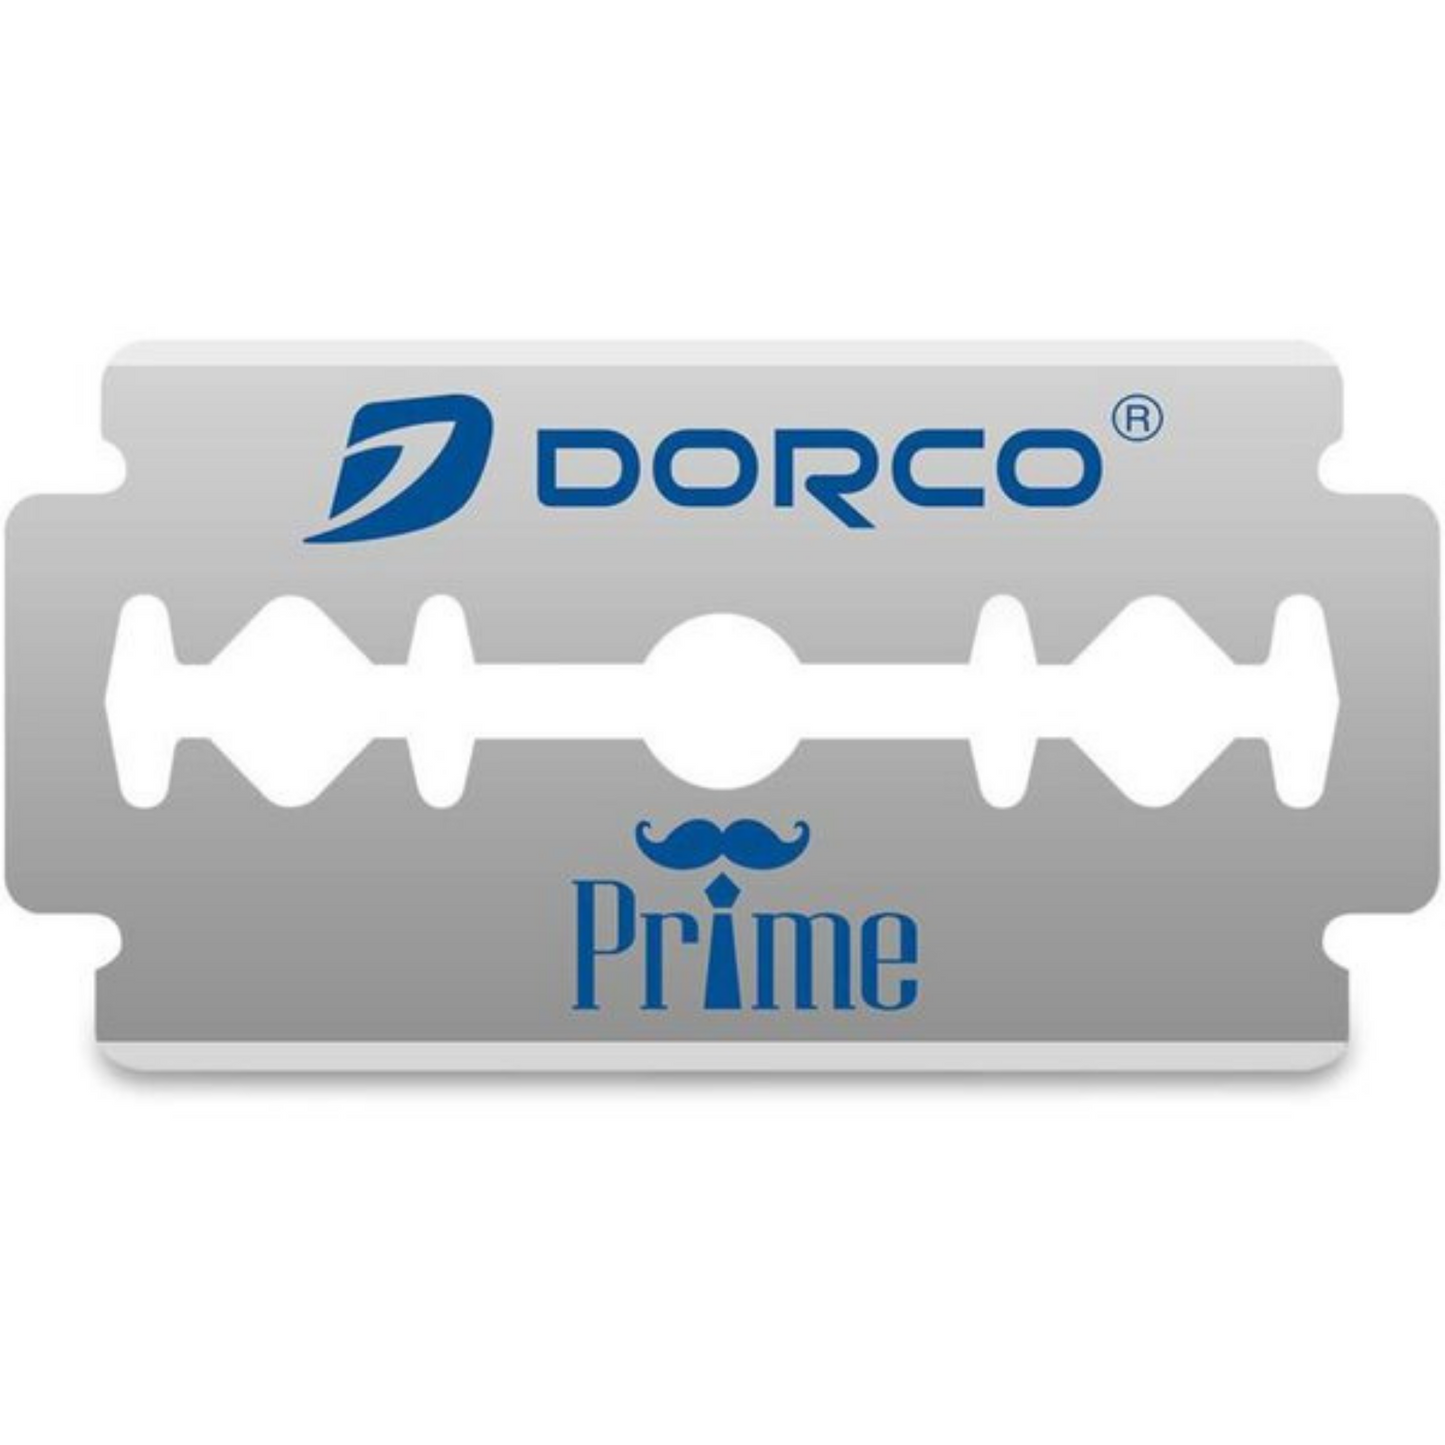 Dorco Prime Platinum Blades (100 count) #10084996